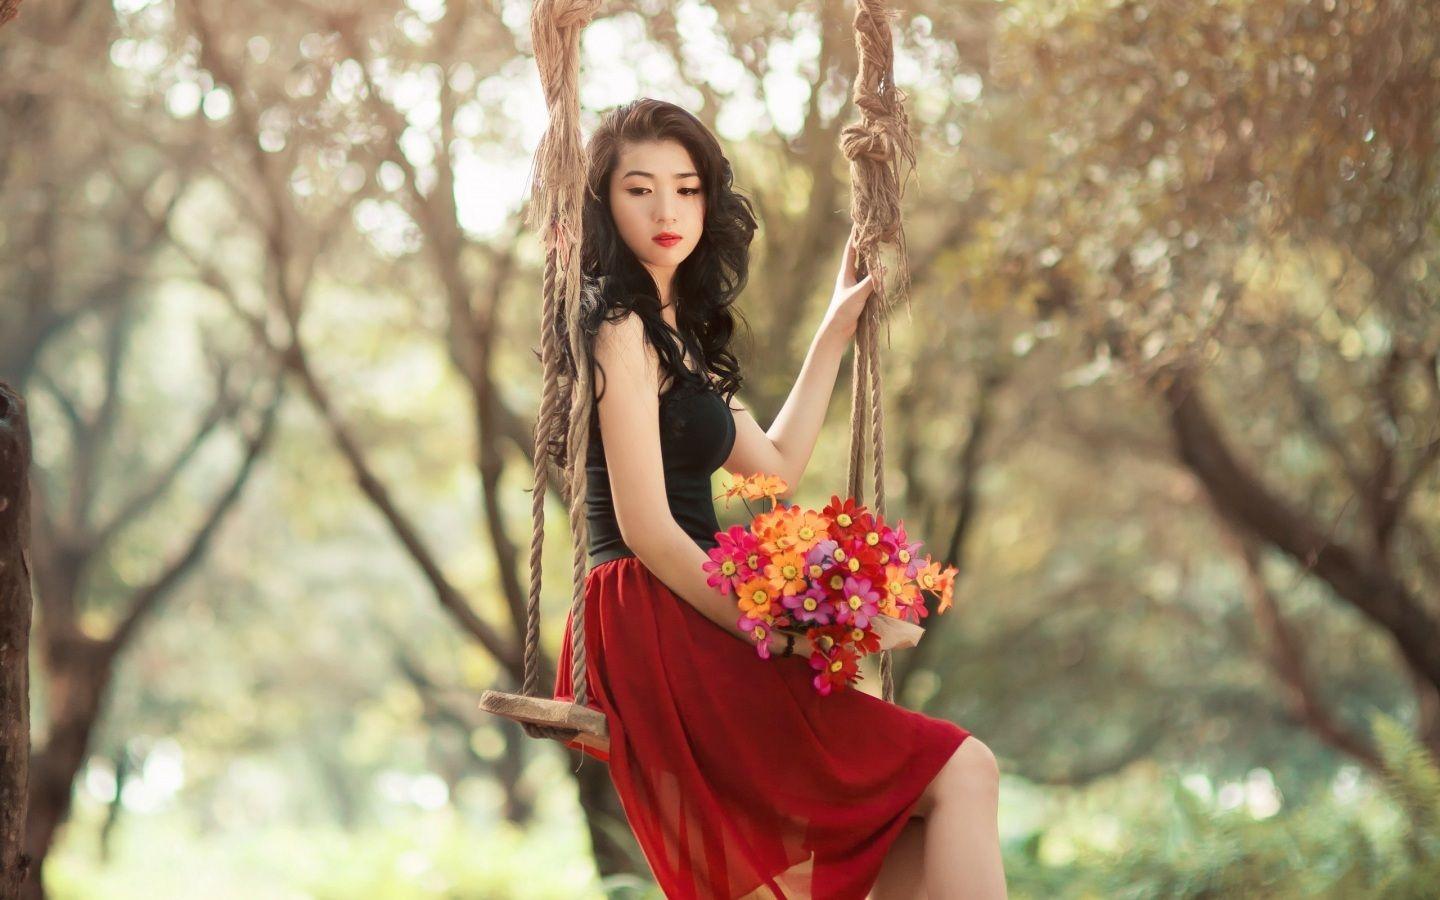 Most Beautiful Girl With Flowers HD Wallpaper. Beautiful girl